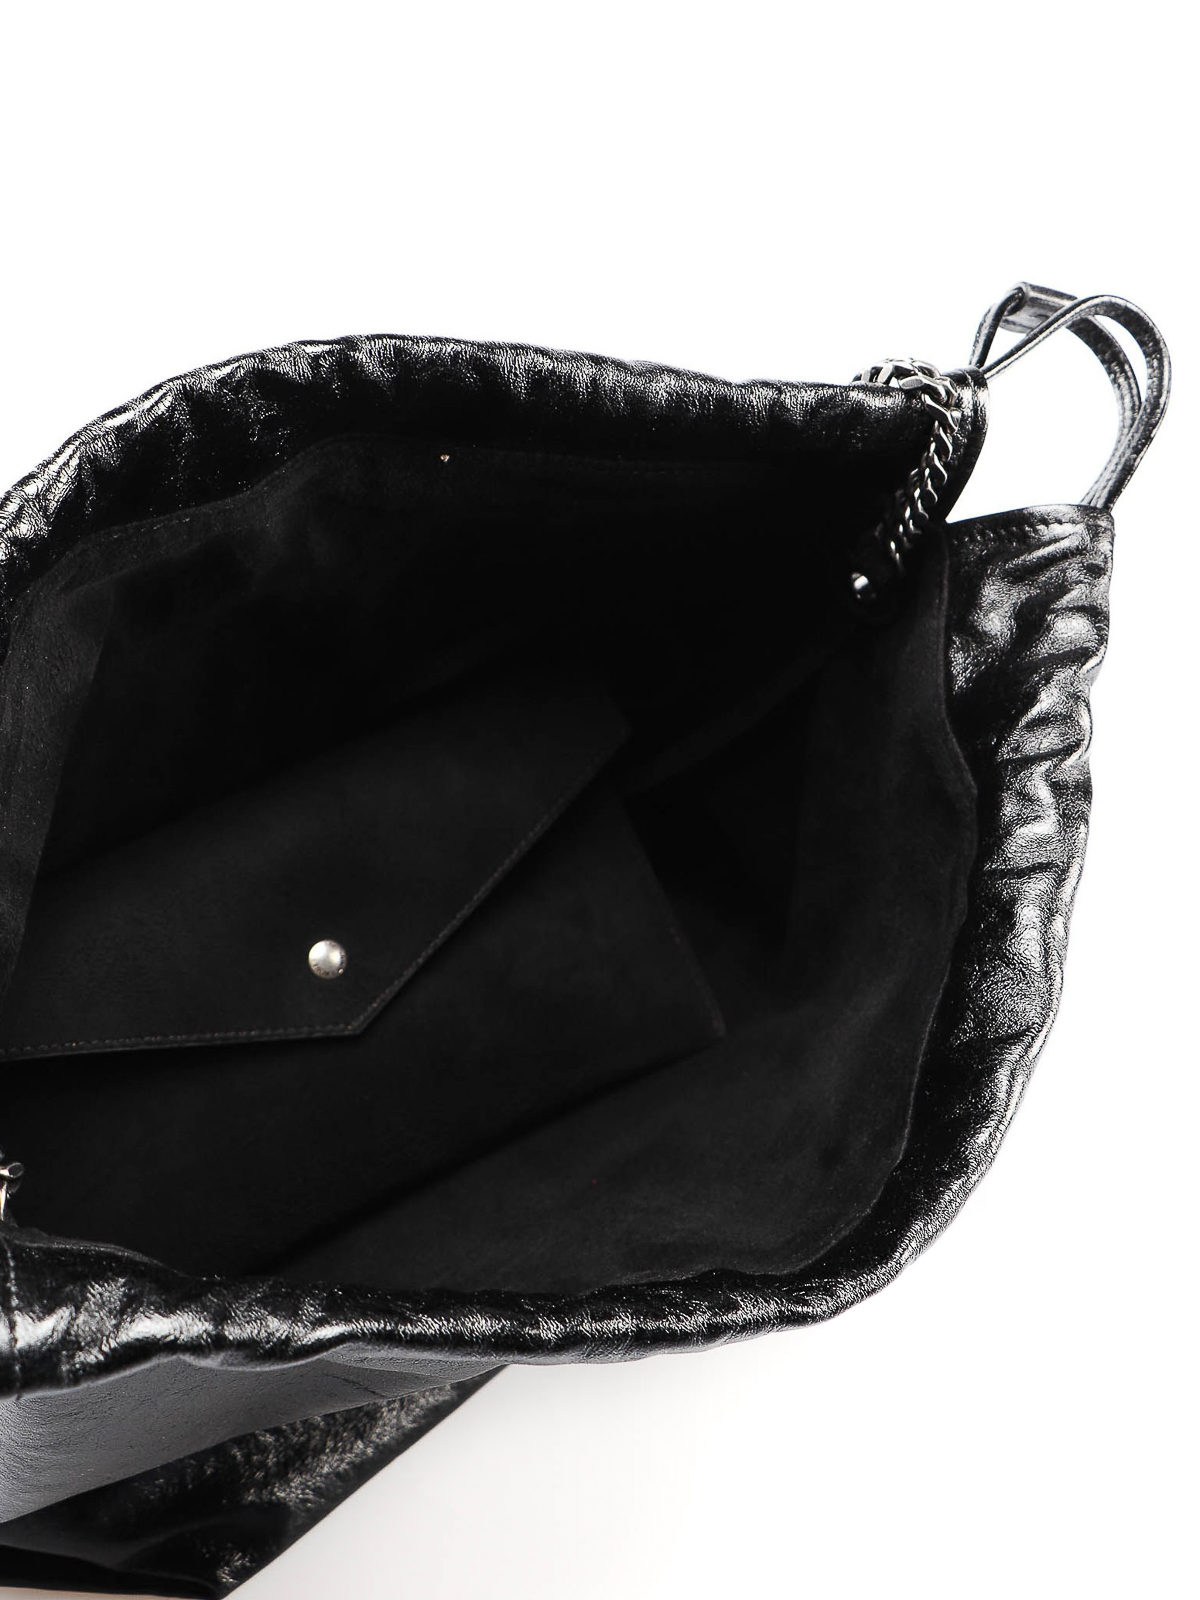 Saint Laurent Leather Teddy Bucket Bag, Saint Laurent Handbags